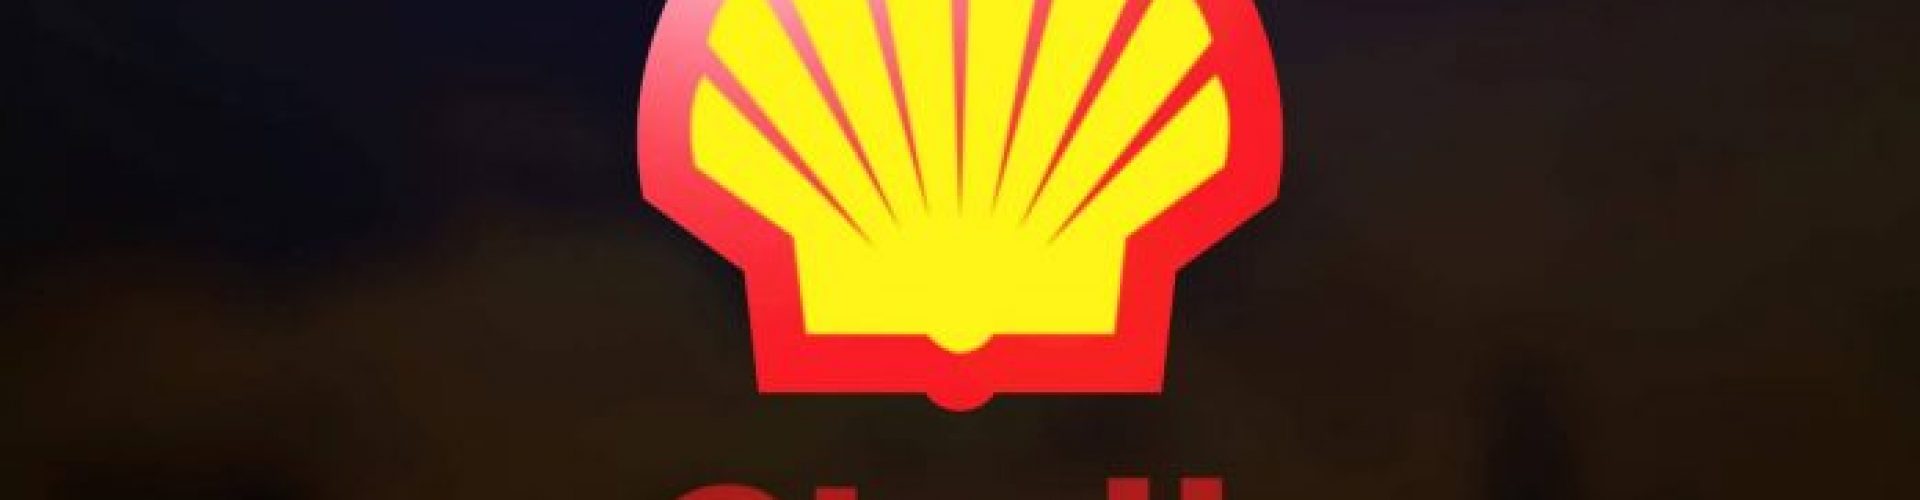 Shell-Logo-Wallpaper-696x392-2.jpg